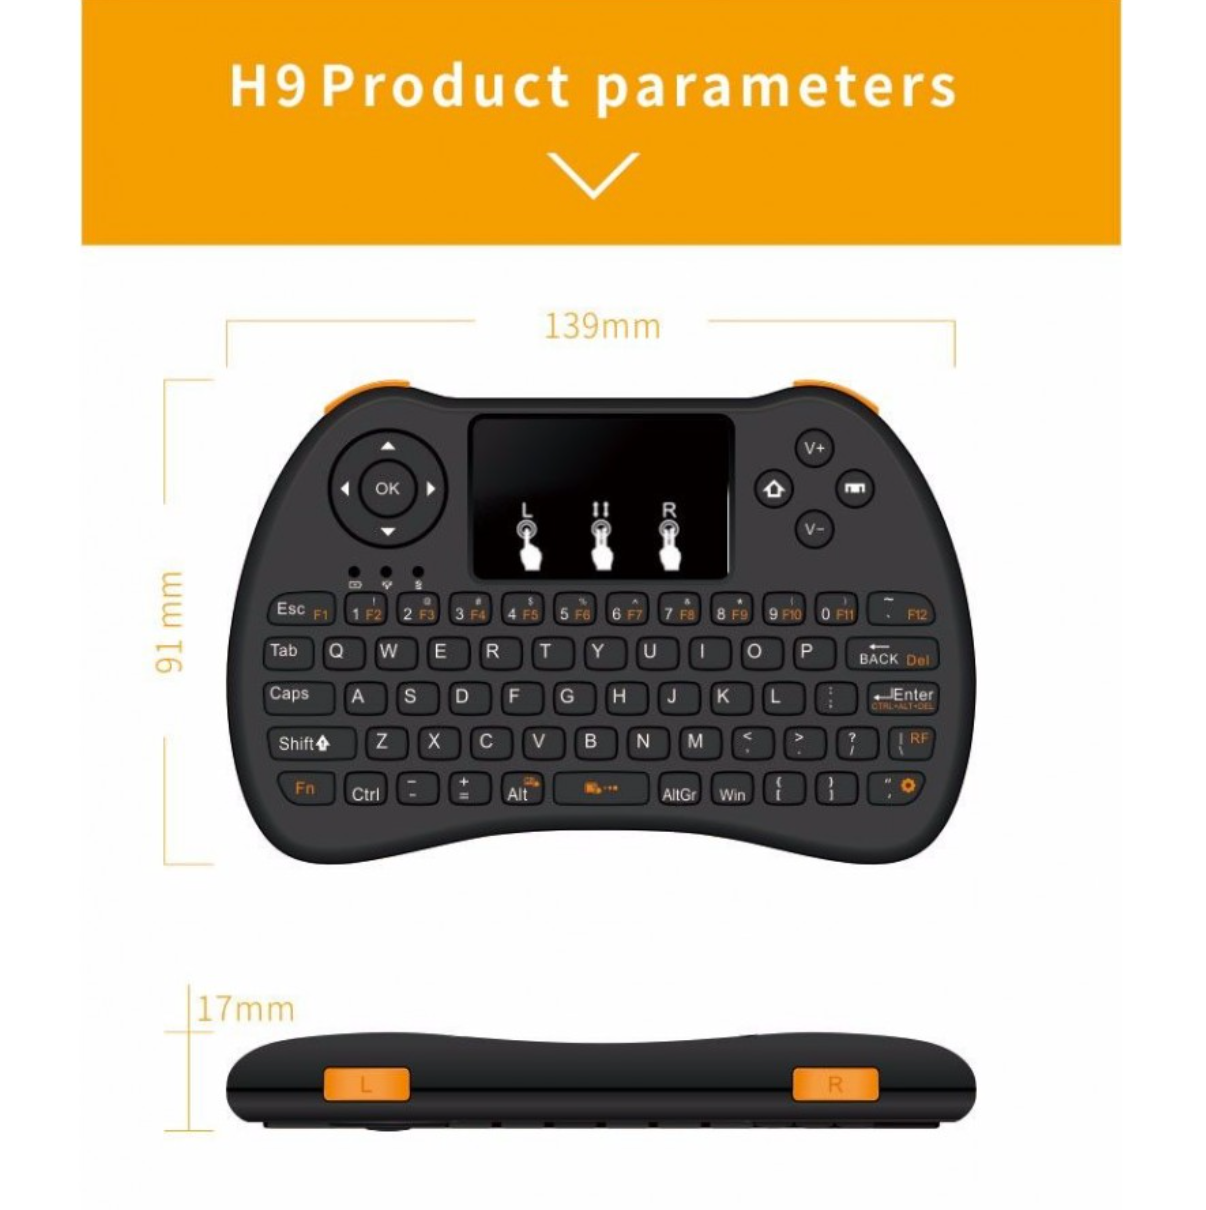 '- Mini tastatura Wireless portabila, mouse integrat si acumulator